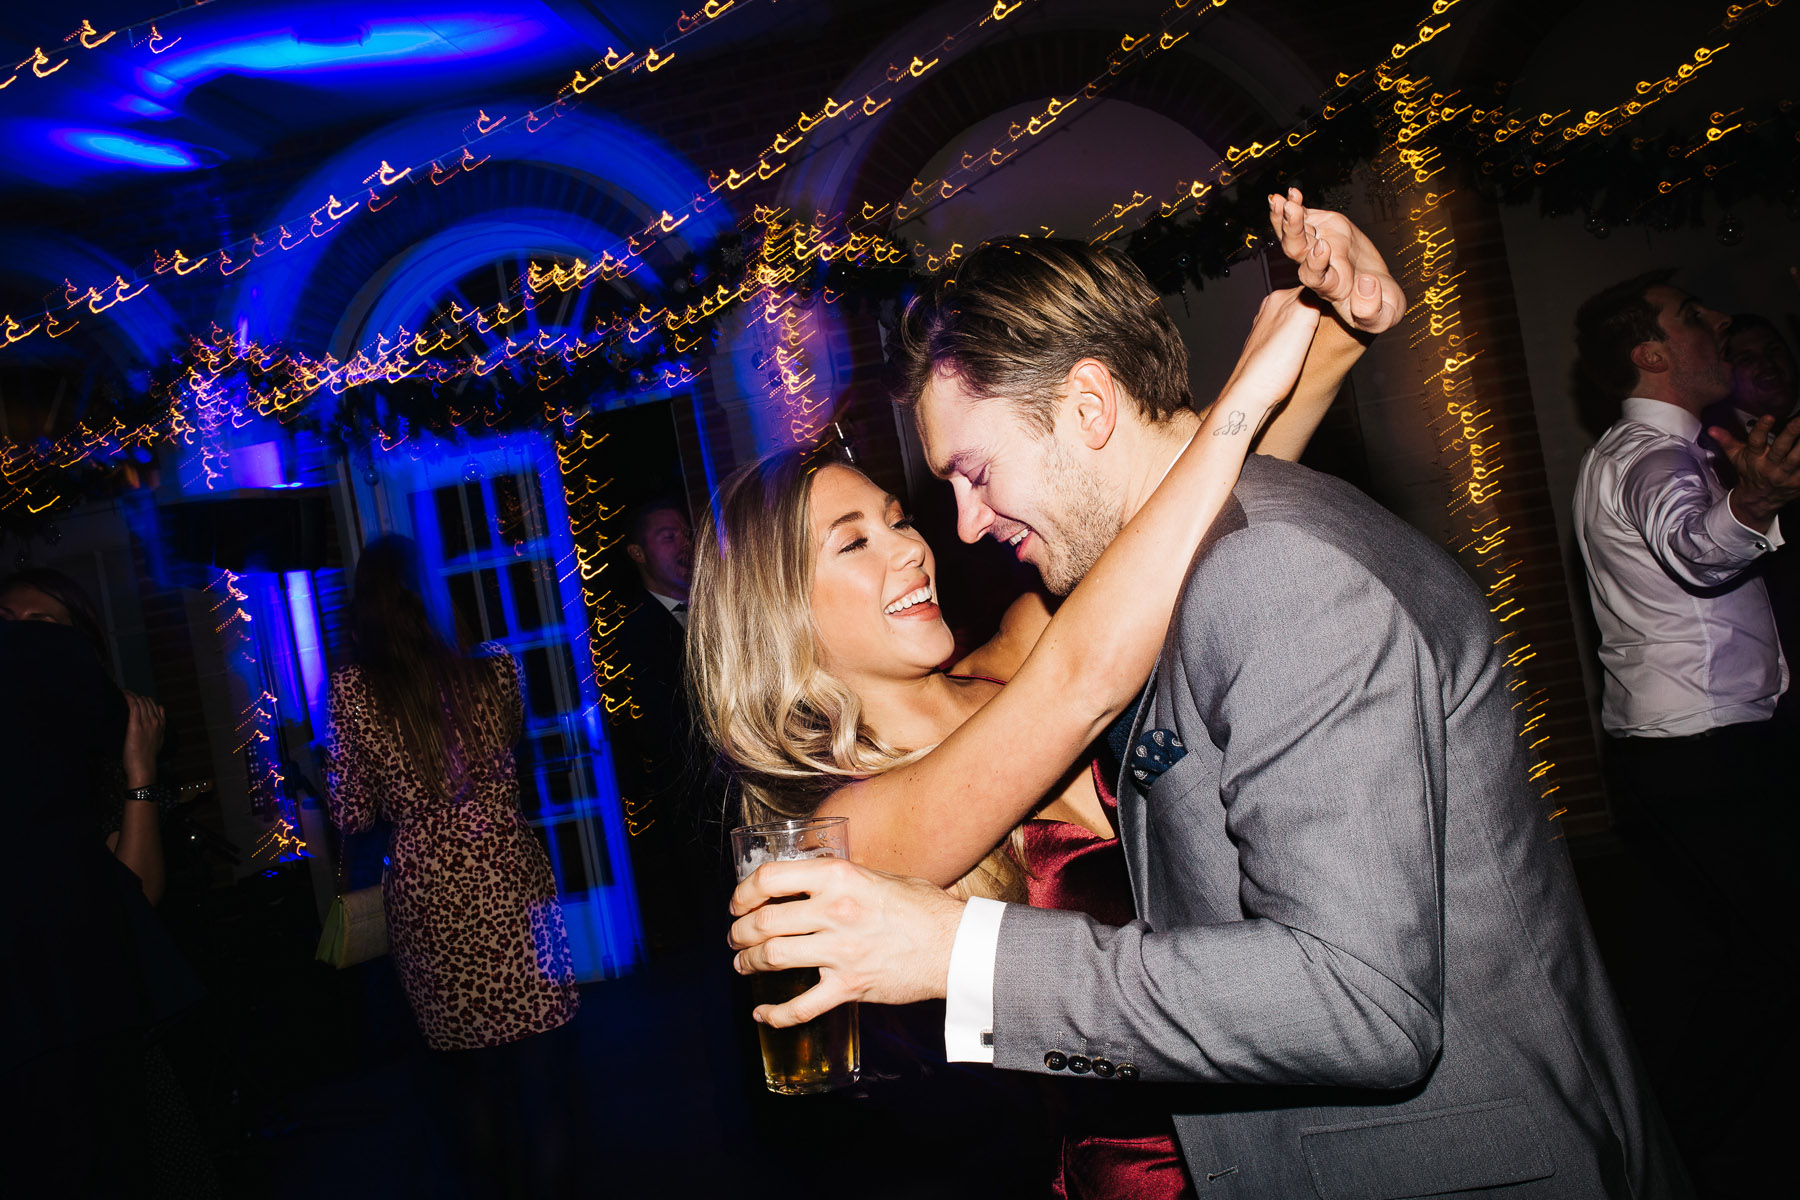 Dancing at a wedding reception 